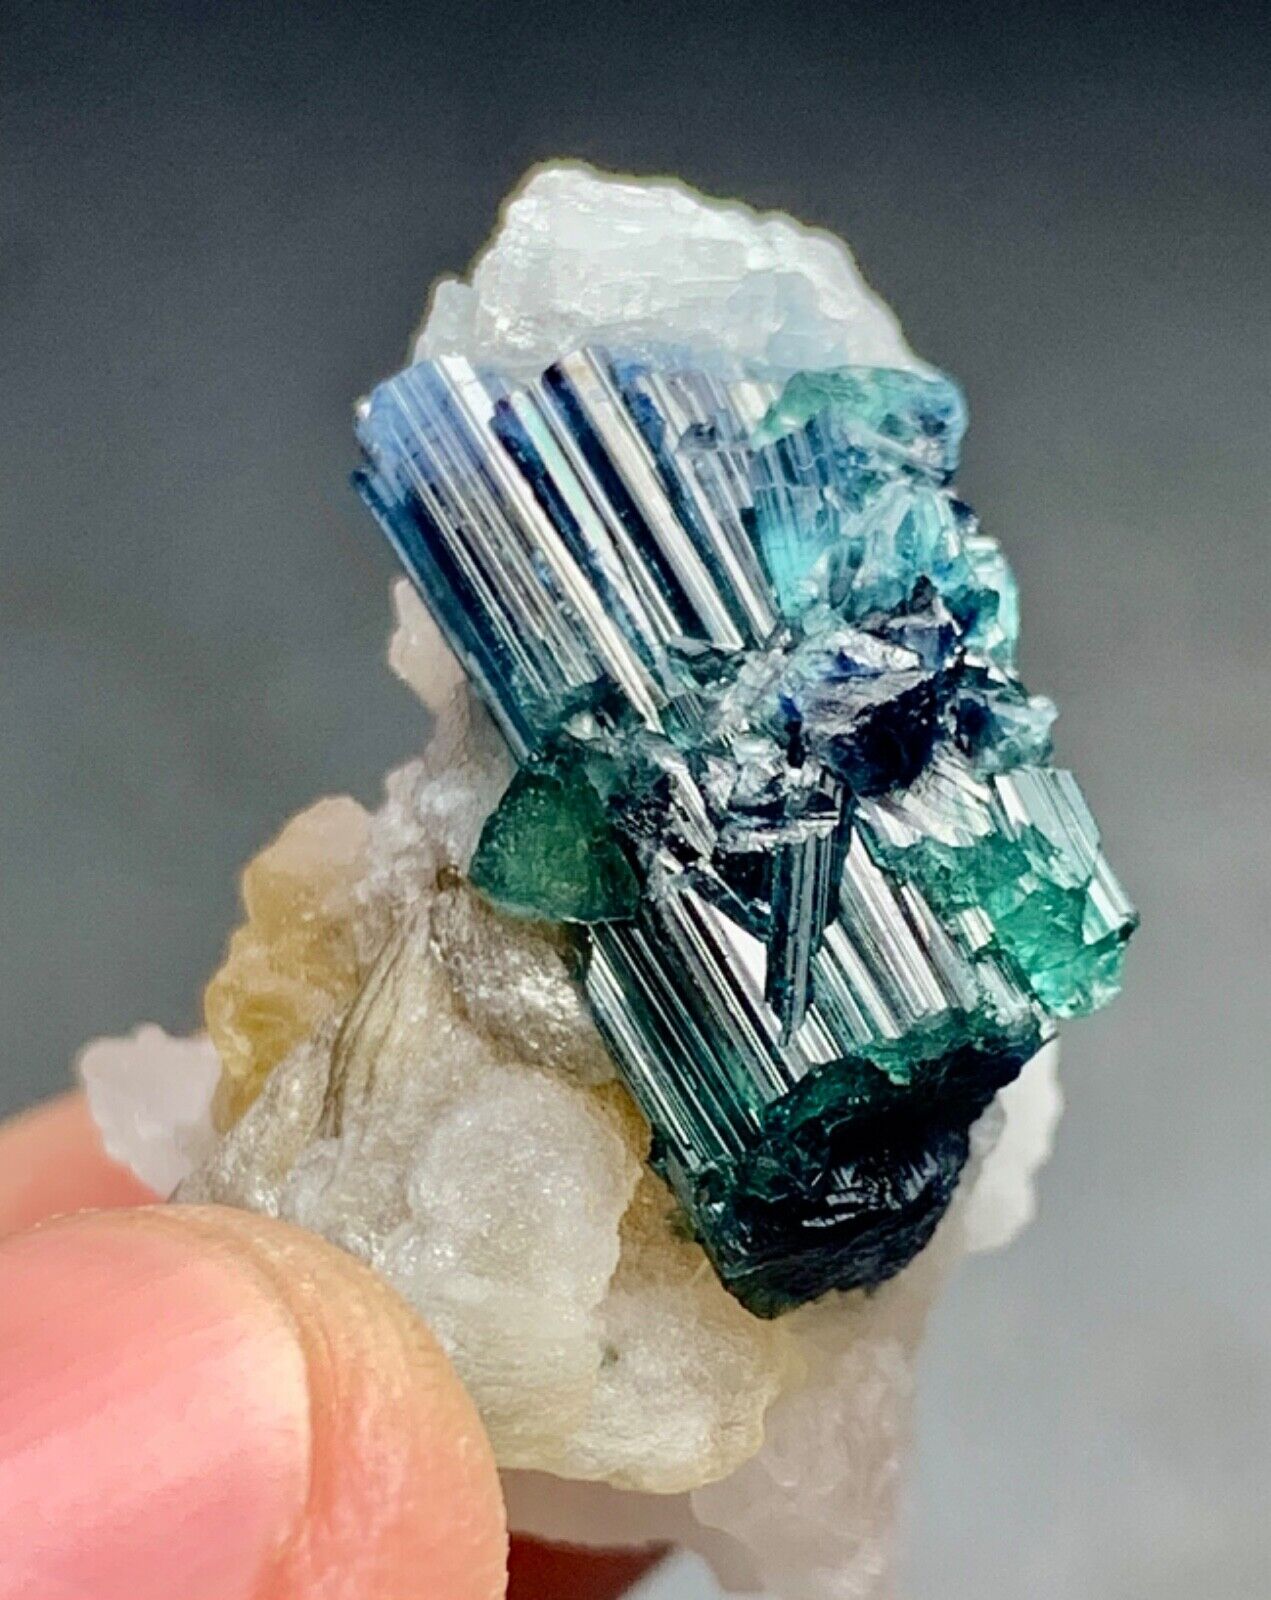 40 Carat Indicolite Tourmaline Crystal Specimen From Afghanistan